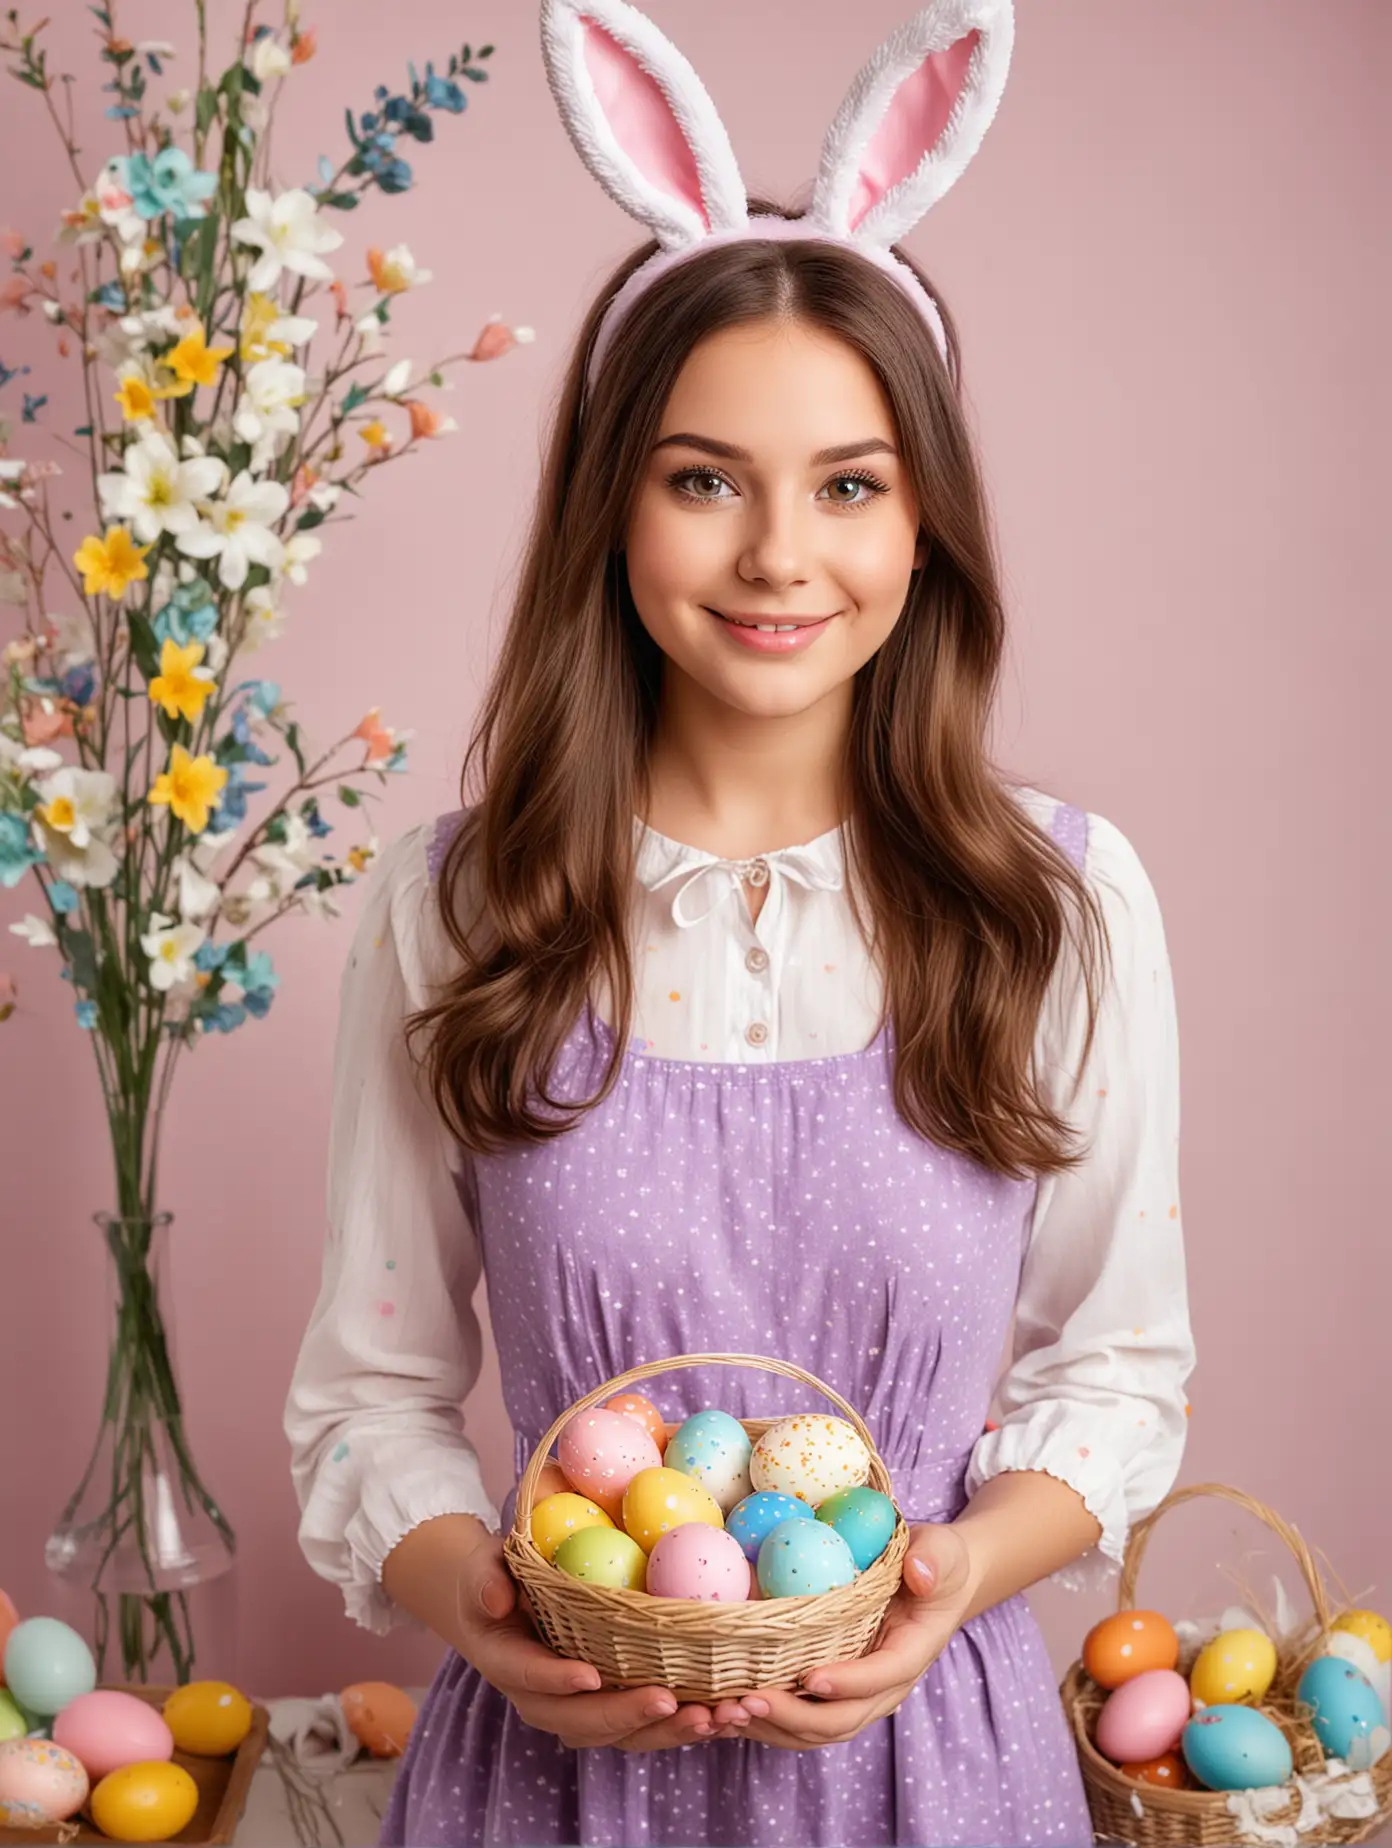 Festive Easter Celebration Vibrant American Woman Amidst Easter Decor